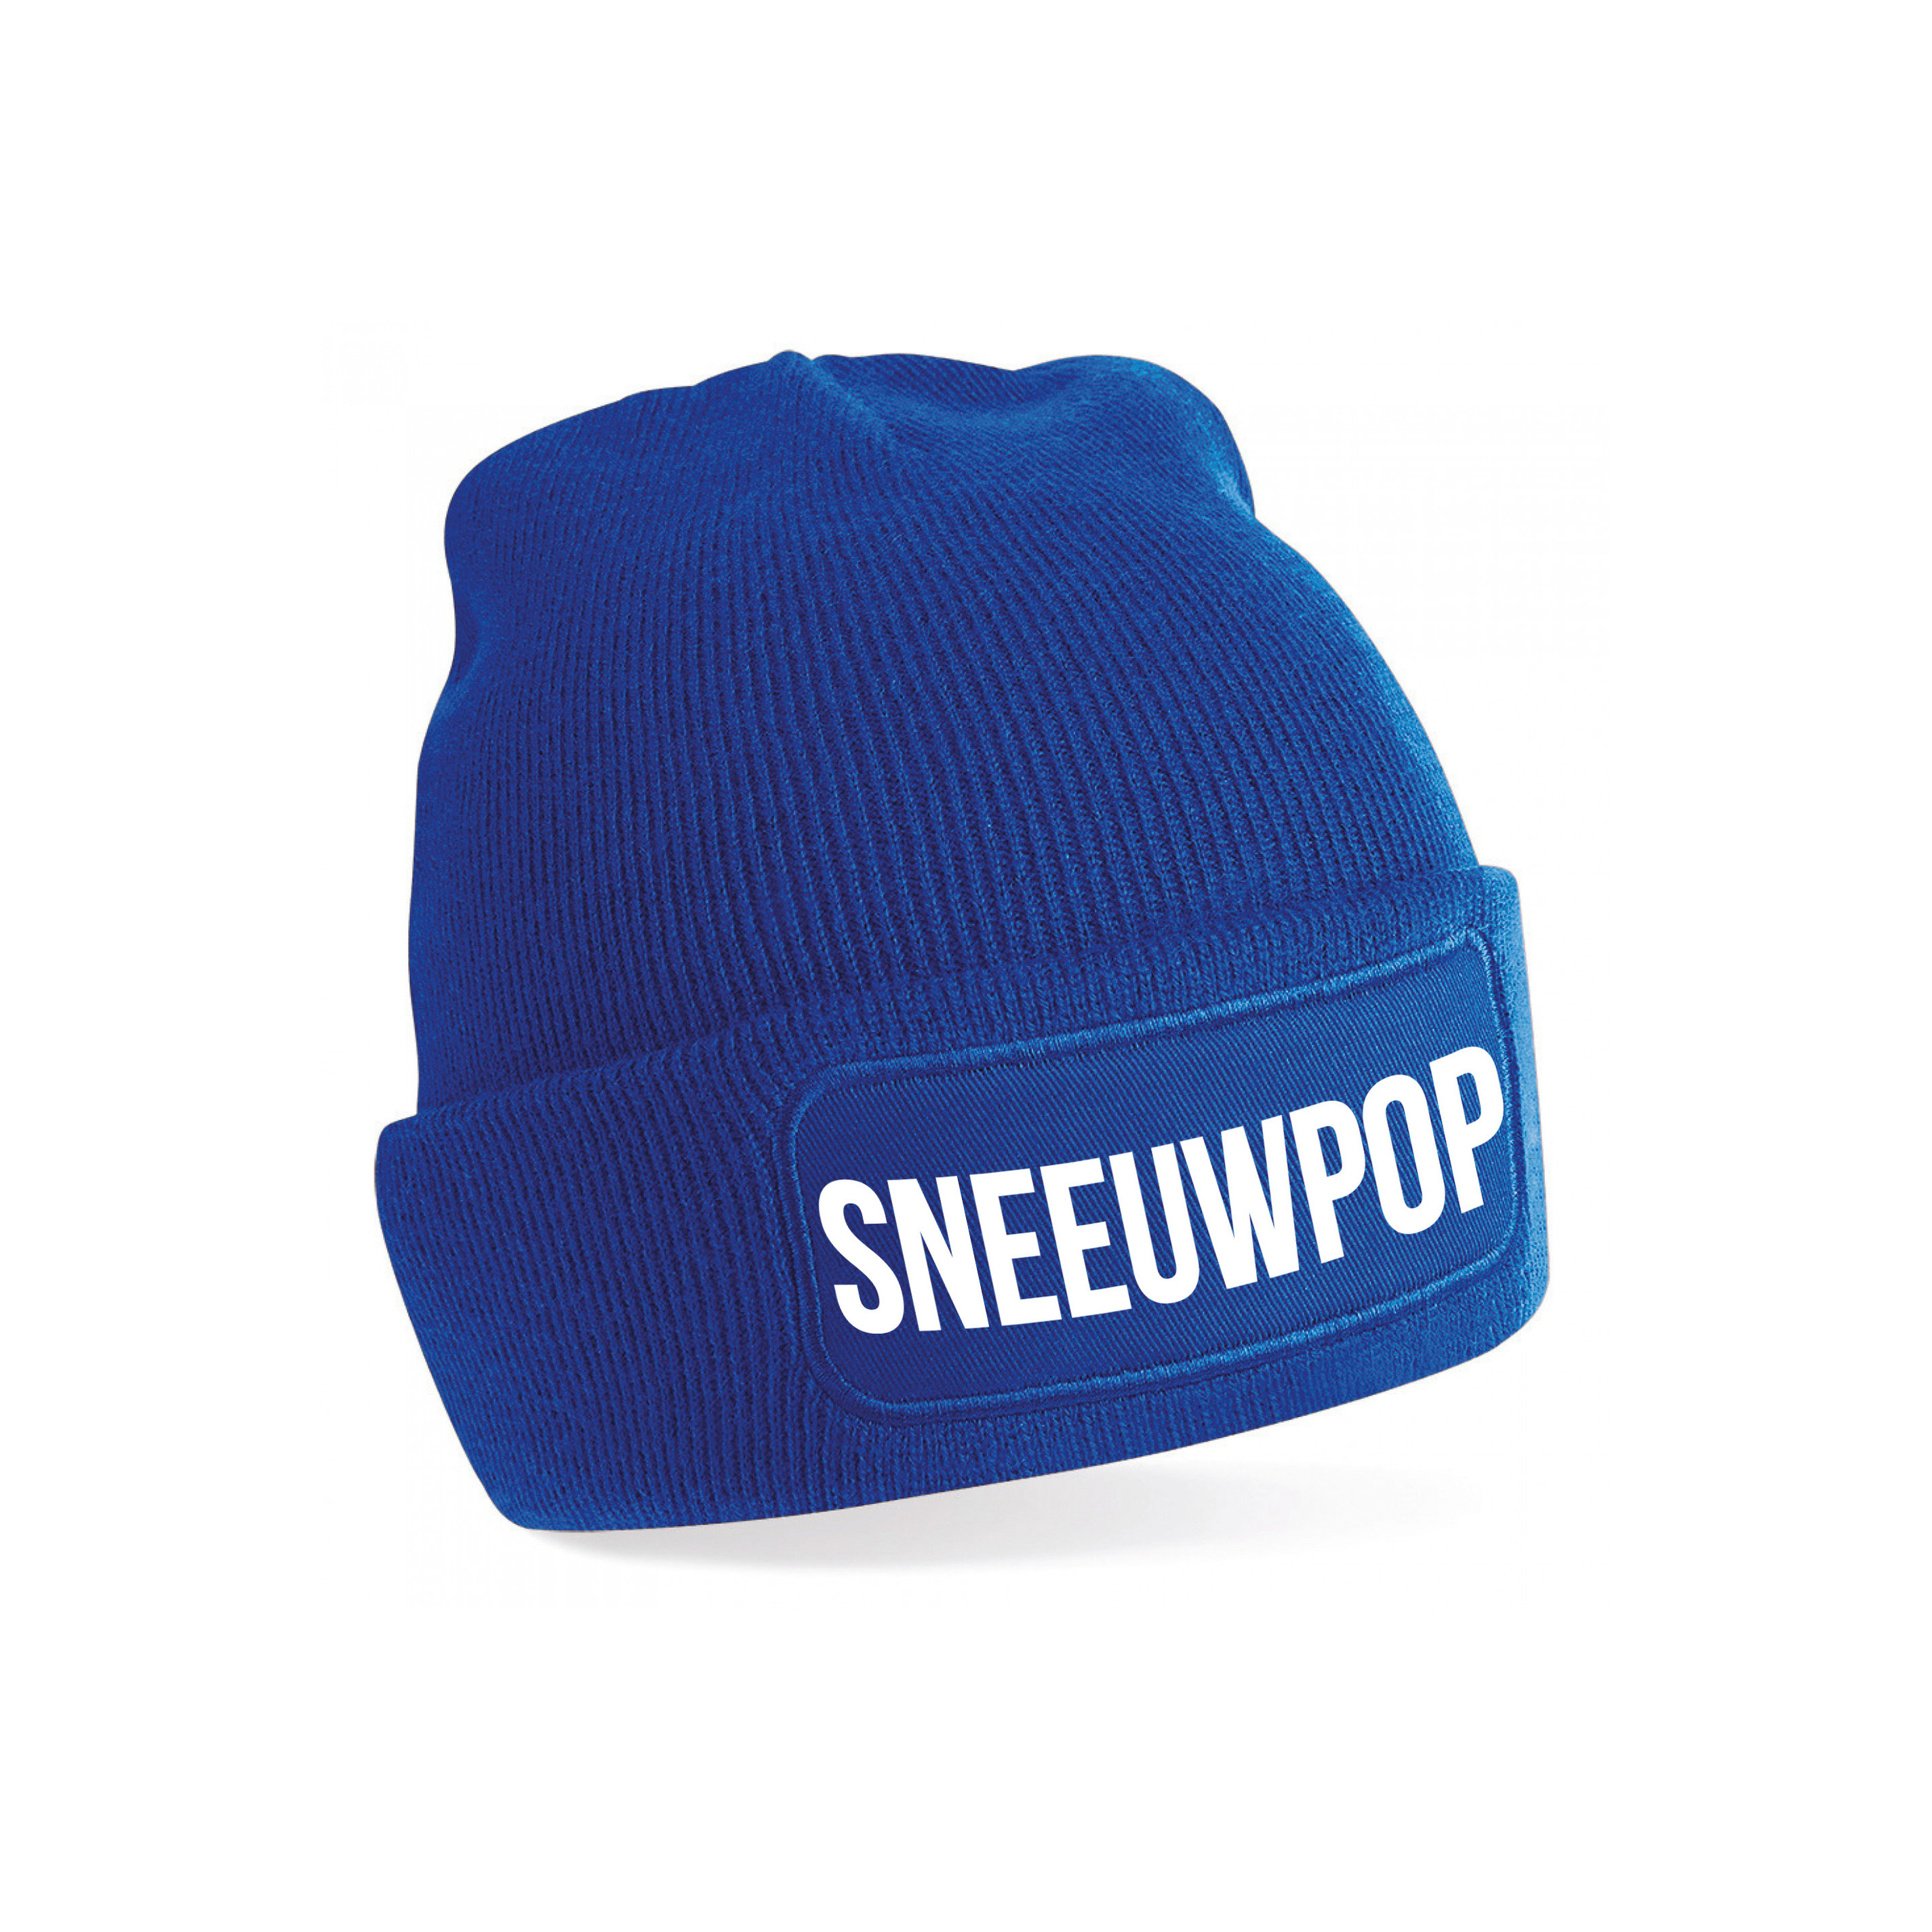 Sneeuwpop muts - unisex - one size - blauw - apres-ski muts One size -